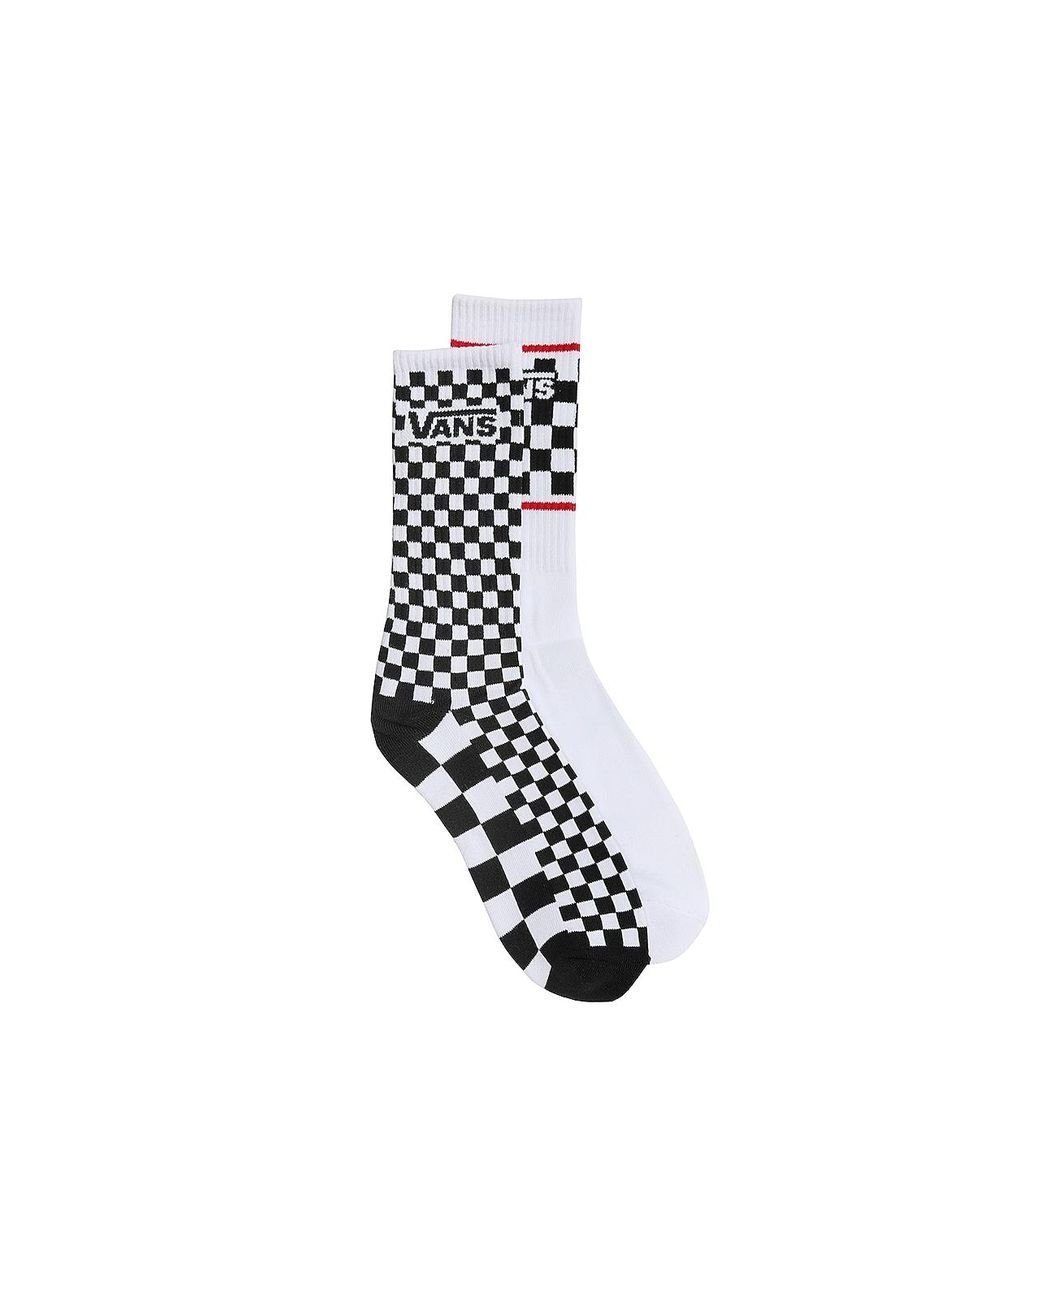 Vans Synthetic Multi Check Crew Socks in Black/White Checkered (Black ...